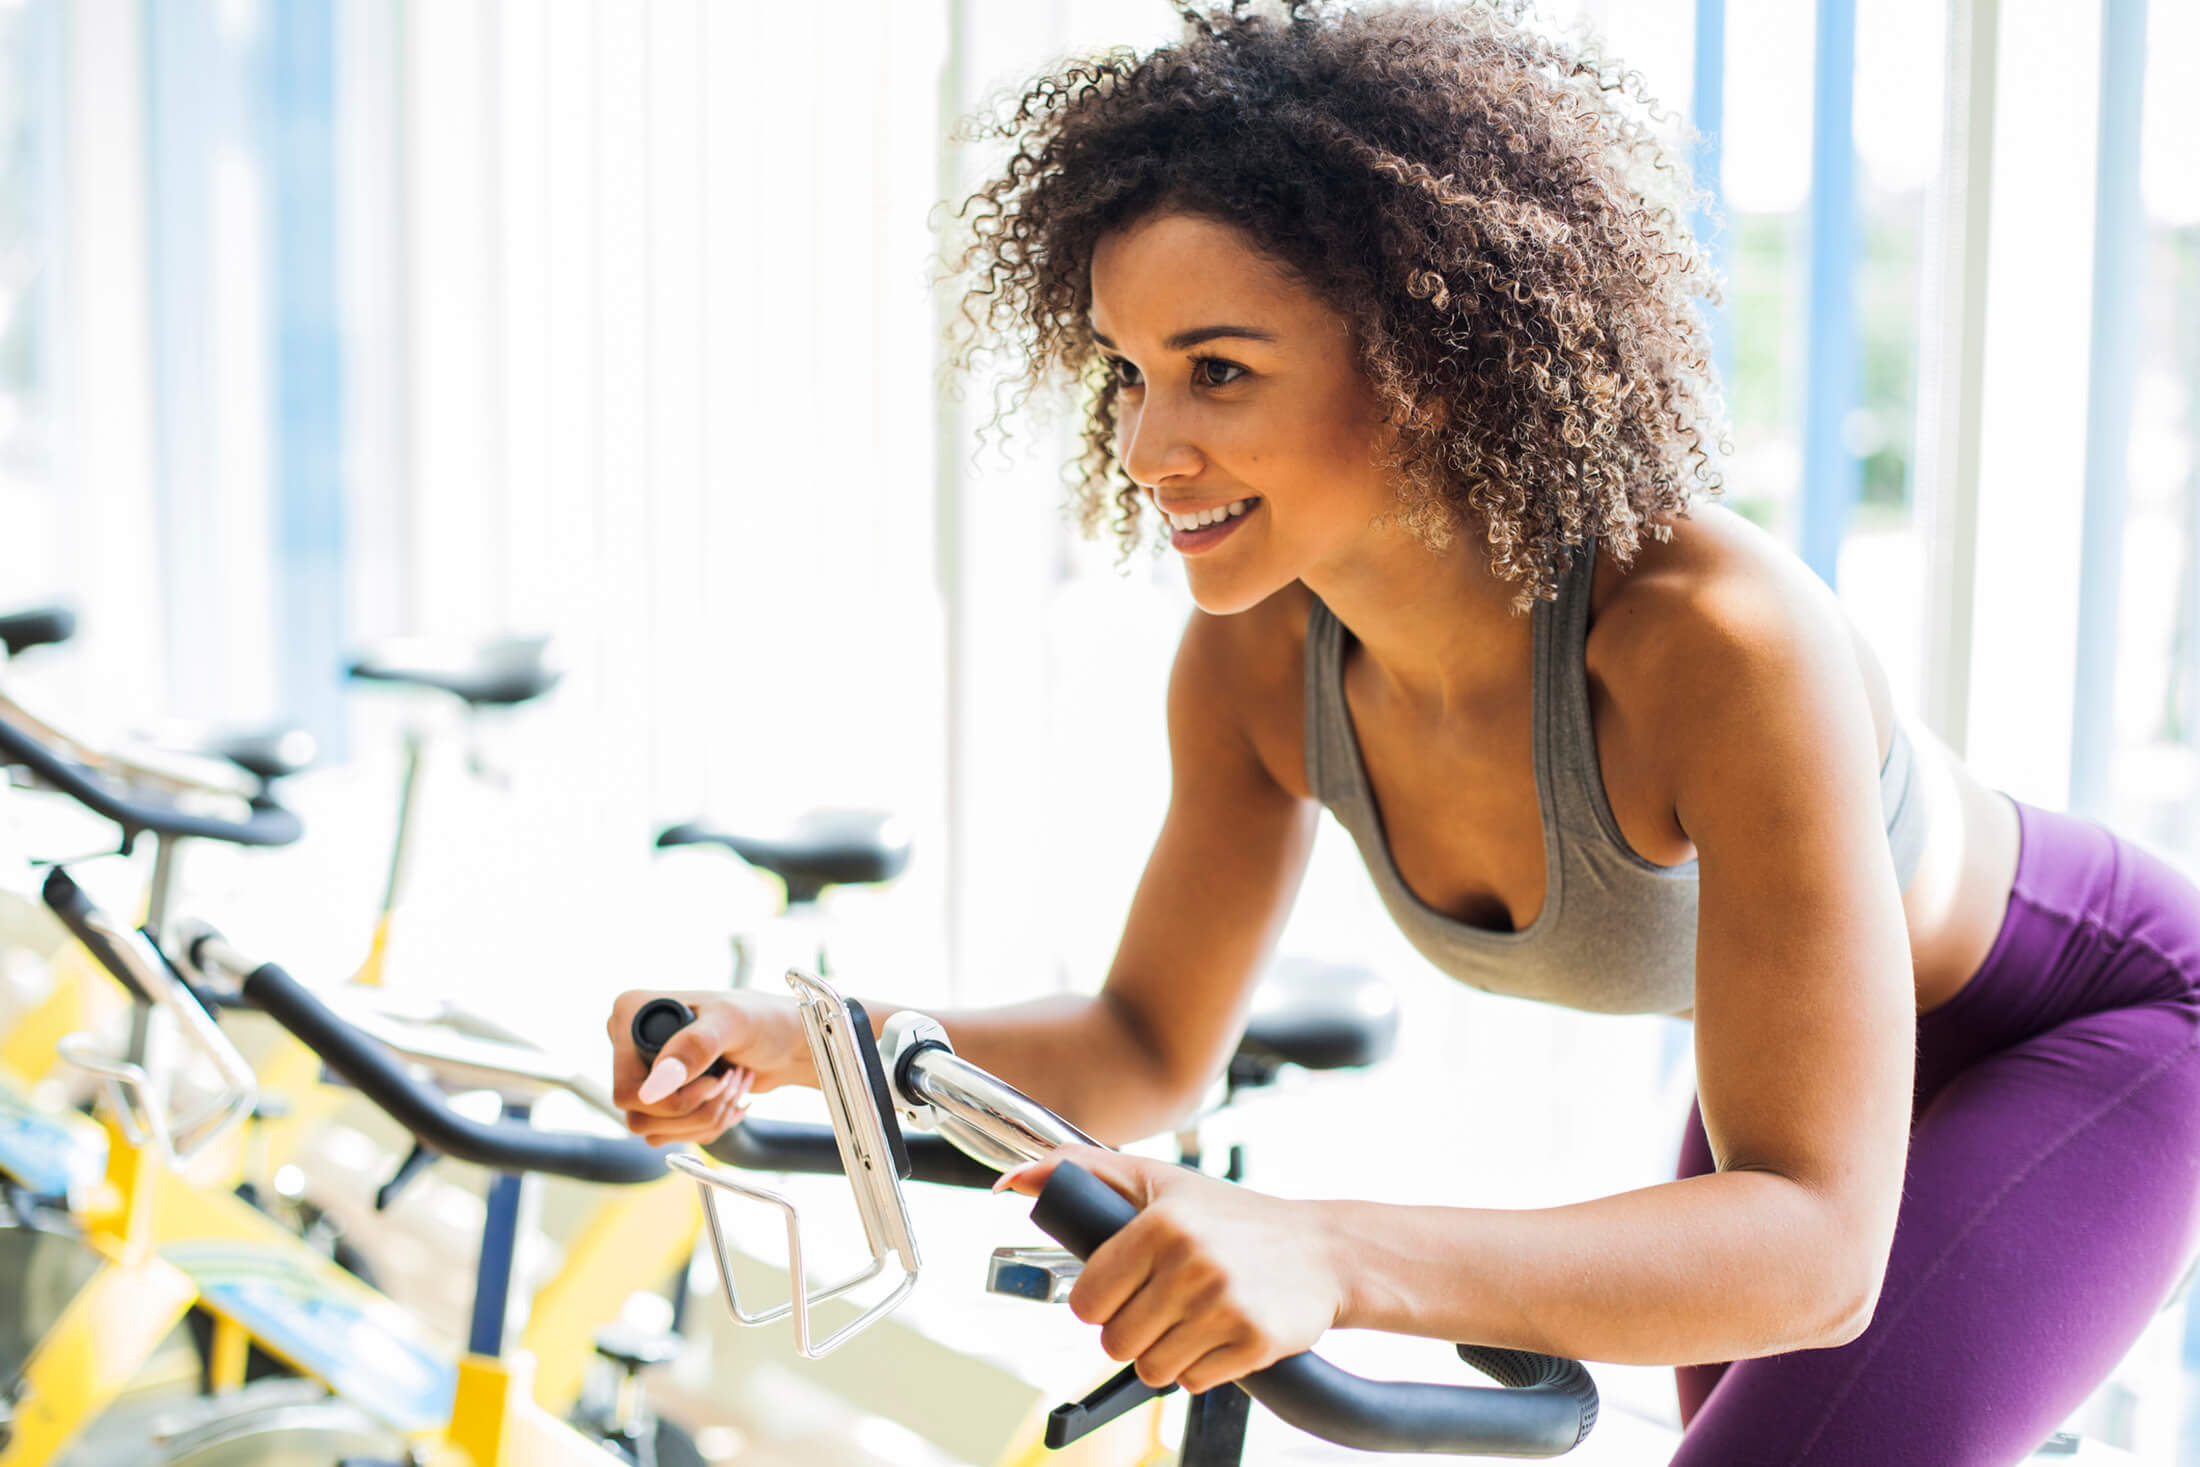 A woman riding an exercise bike